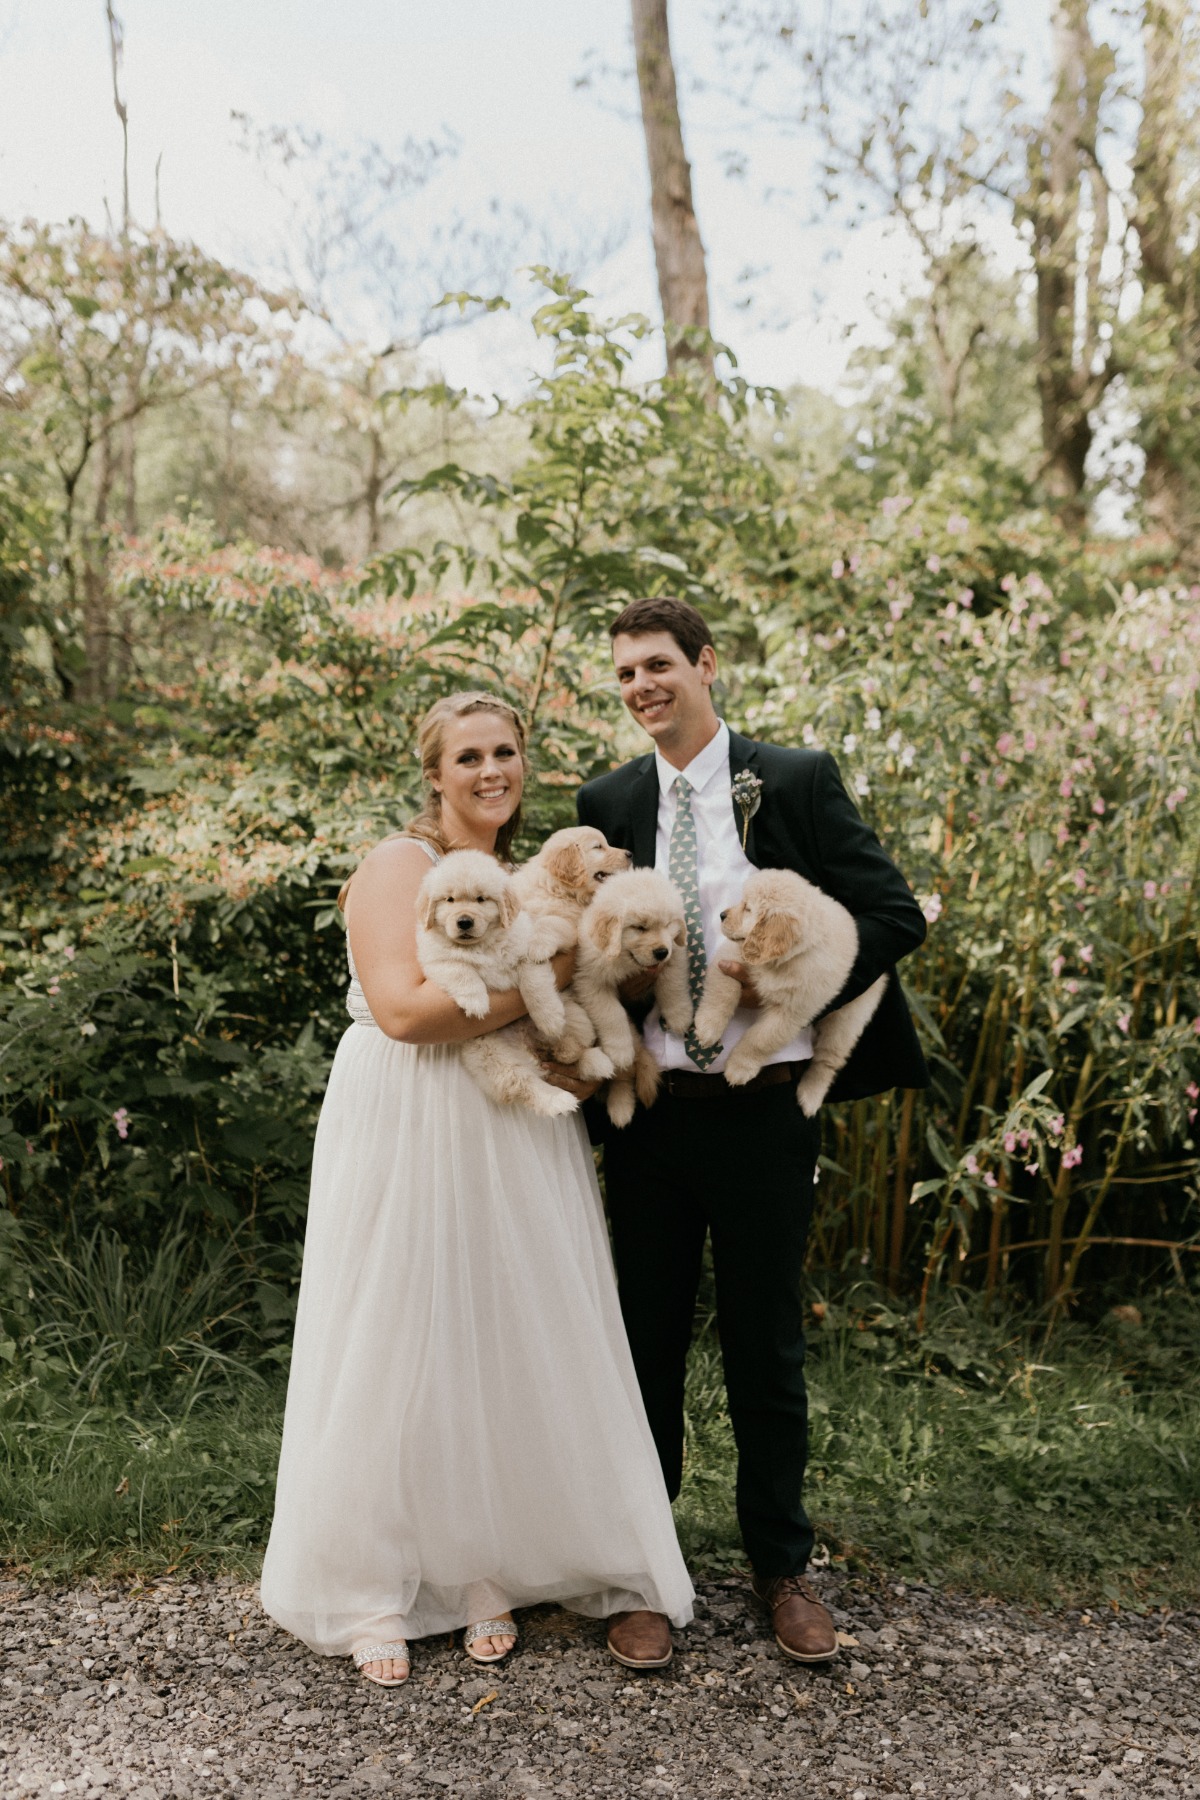 photos-bridegroom-puppies1